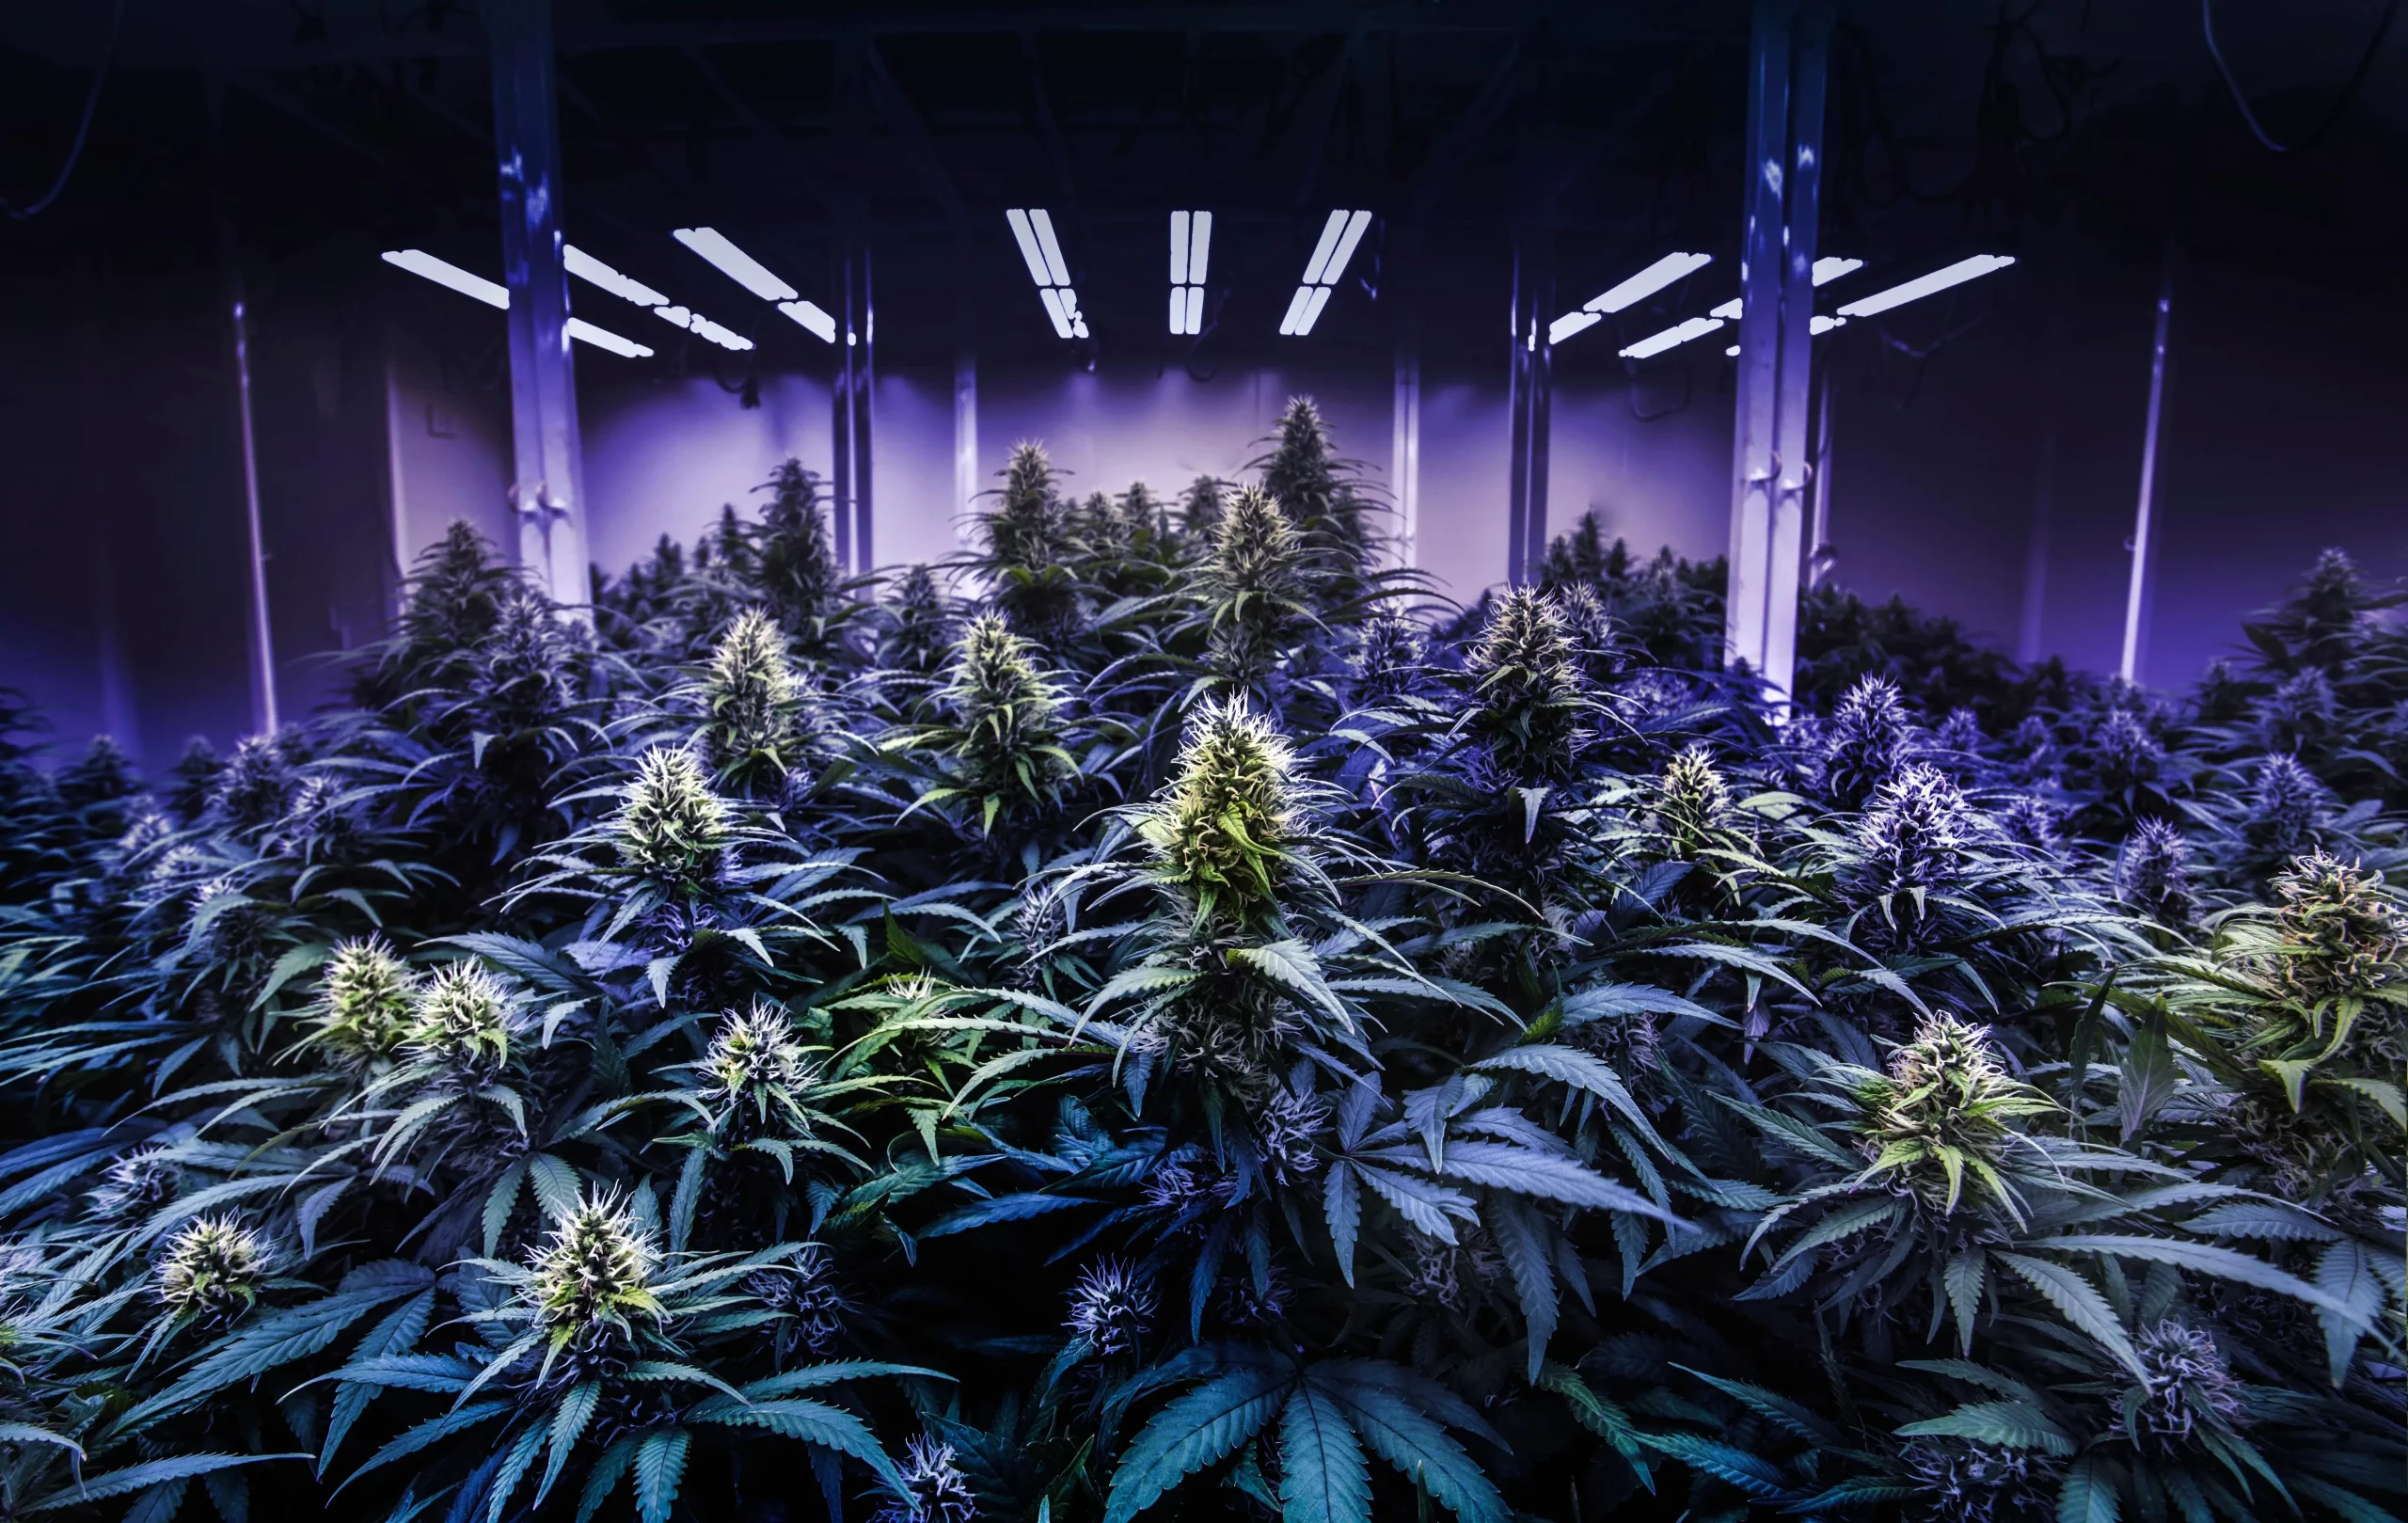 NJ cannabis cultivation cap